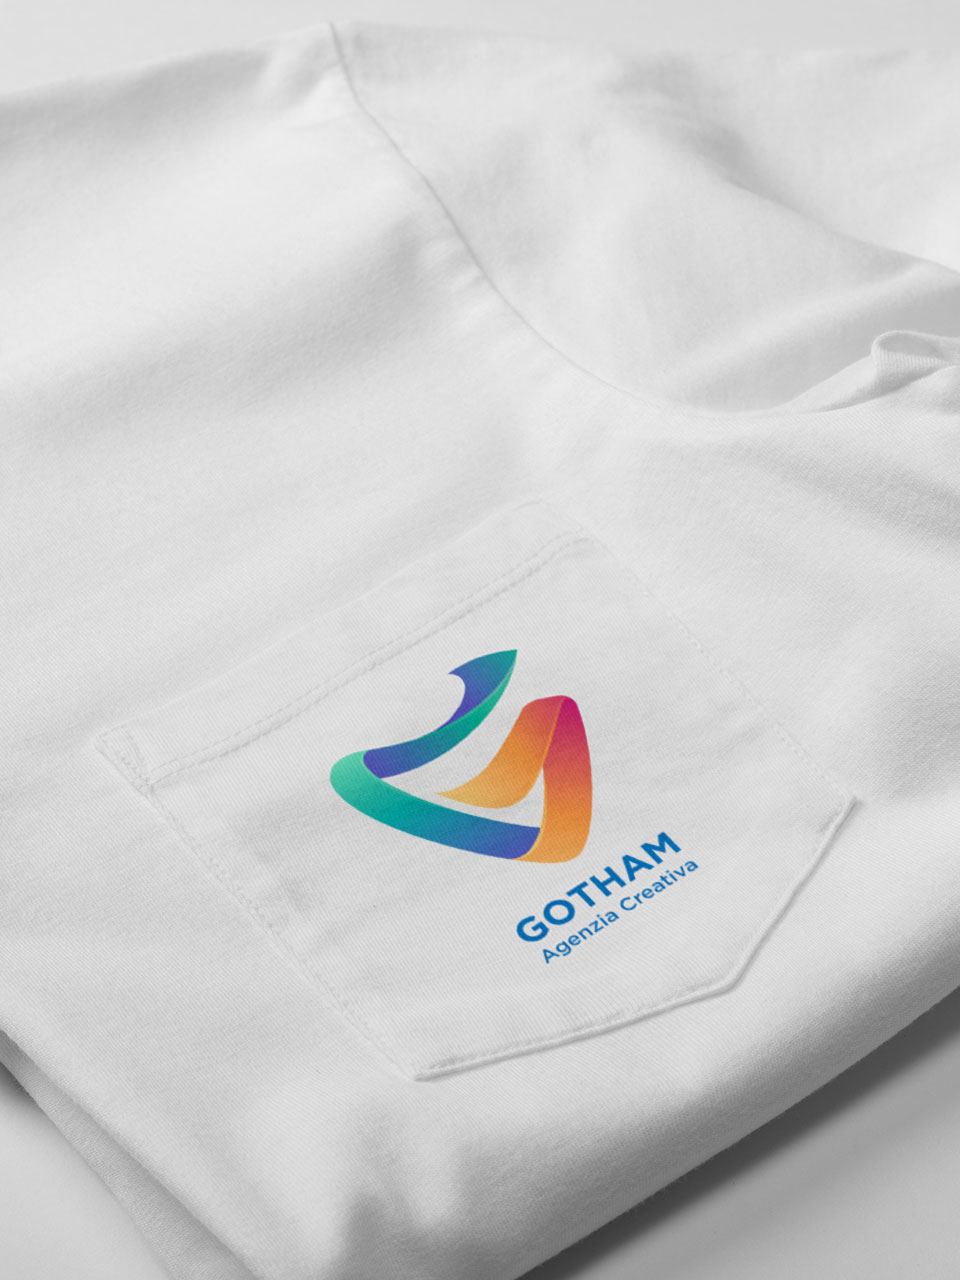 gotham-agenzia-creativa-t-shirt